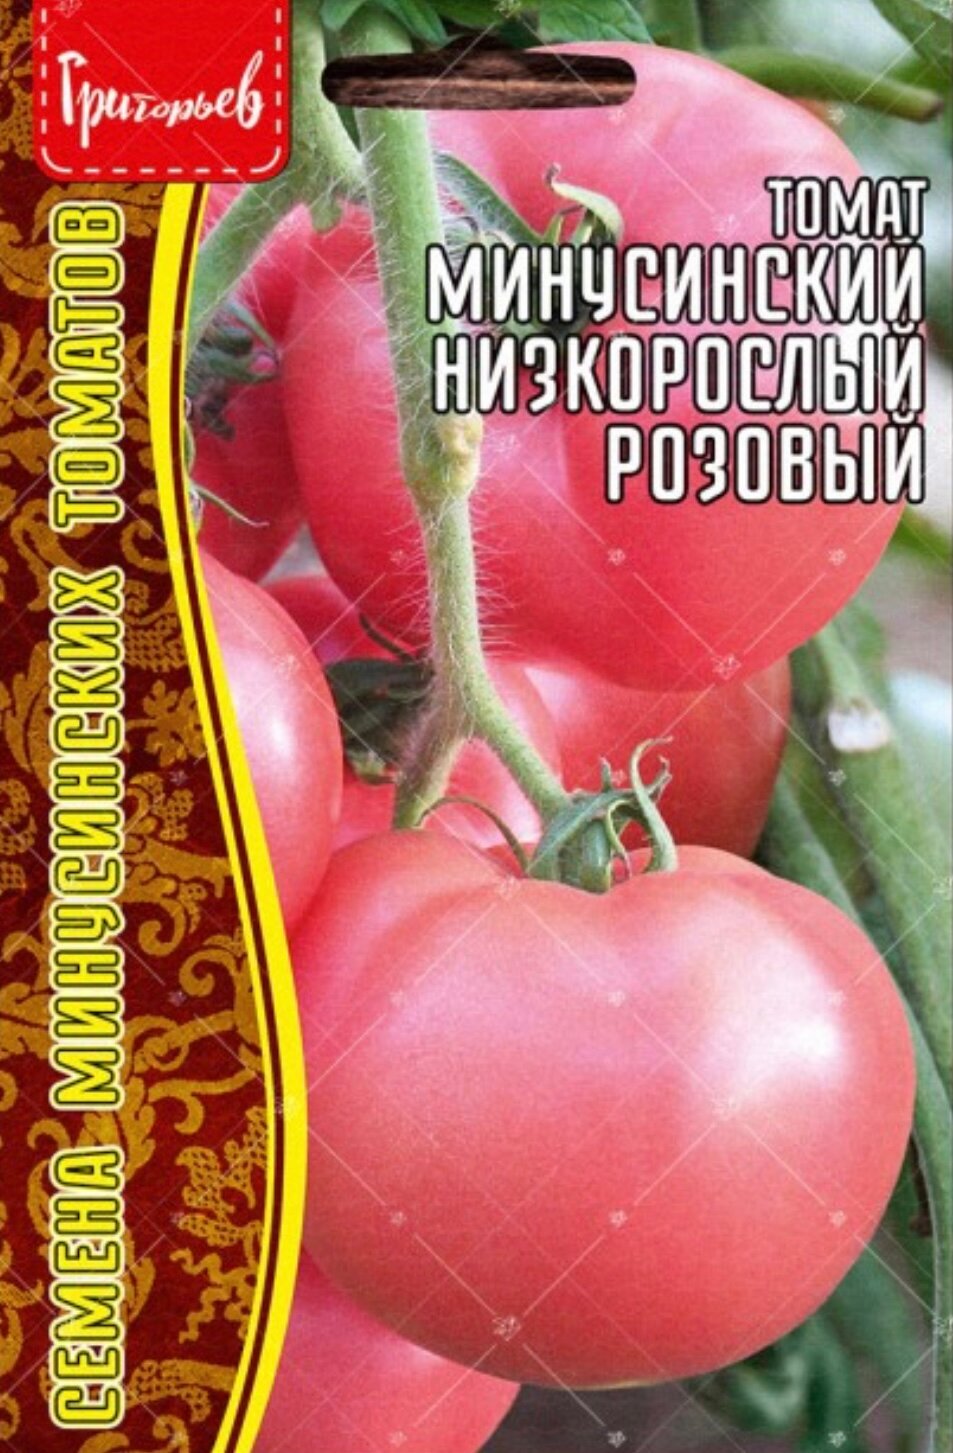 Семена Томата "Минусинский низкорослый розовый" (10 семян).